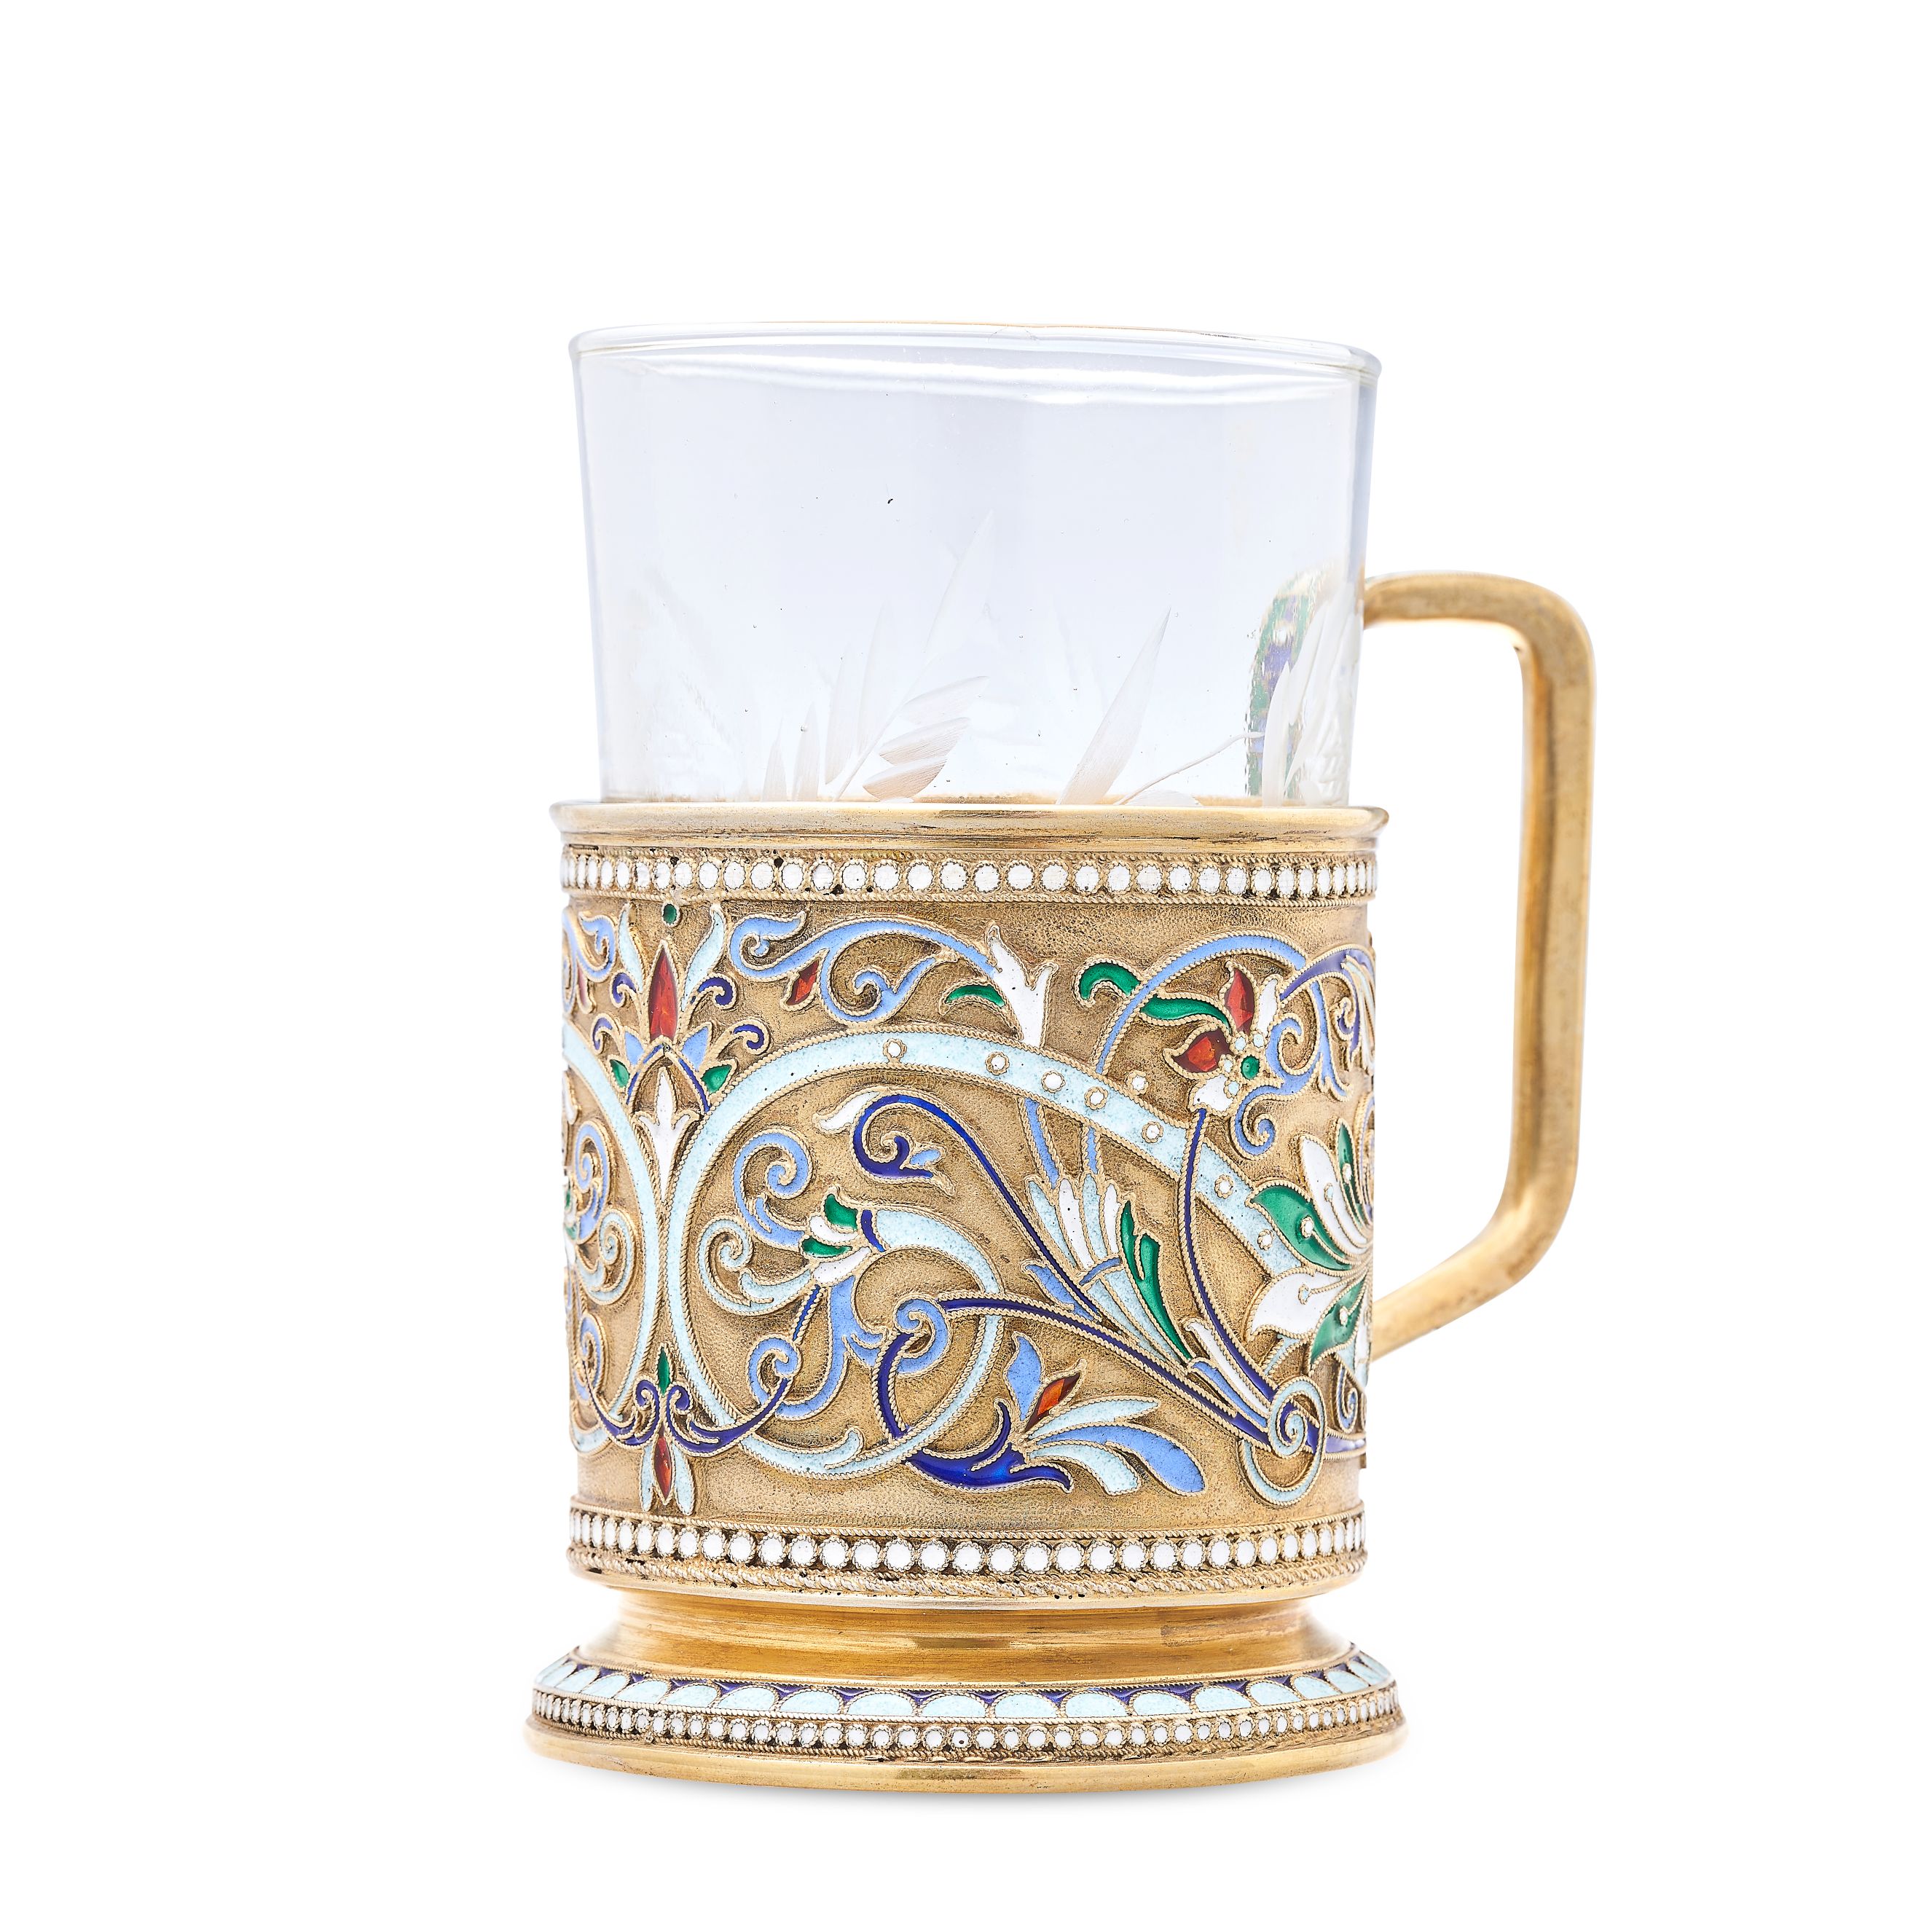 AN ANTIQUE IMPERIAL RUSSIAN ENAMEL PODSTAKANNIK / TEA GLASS HOLDER, VASILY AGAFONOV, MOSCOW 1908- - Image 2 of 2